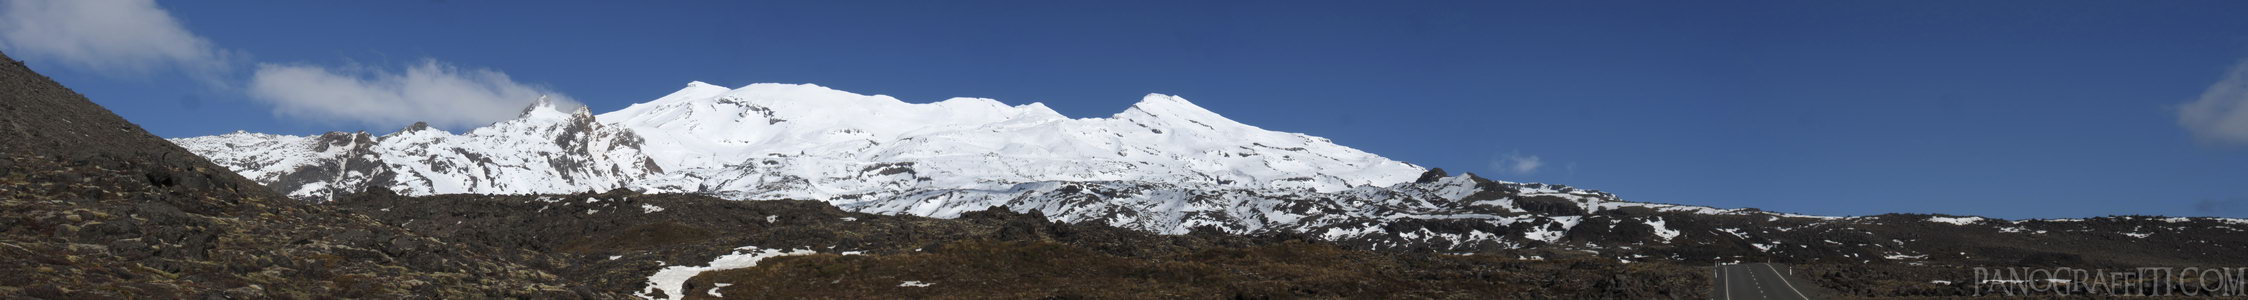 Closeup of Mount Ruapehu - A closer view of Mount Ruapehu from the highway